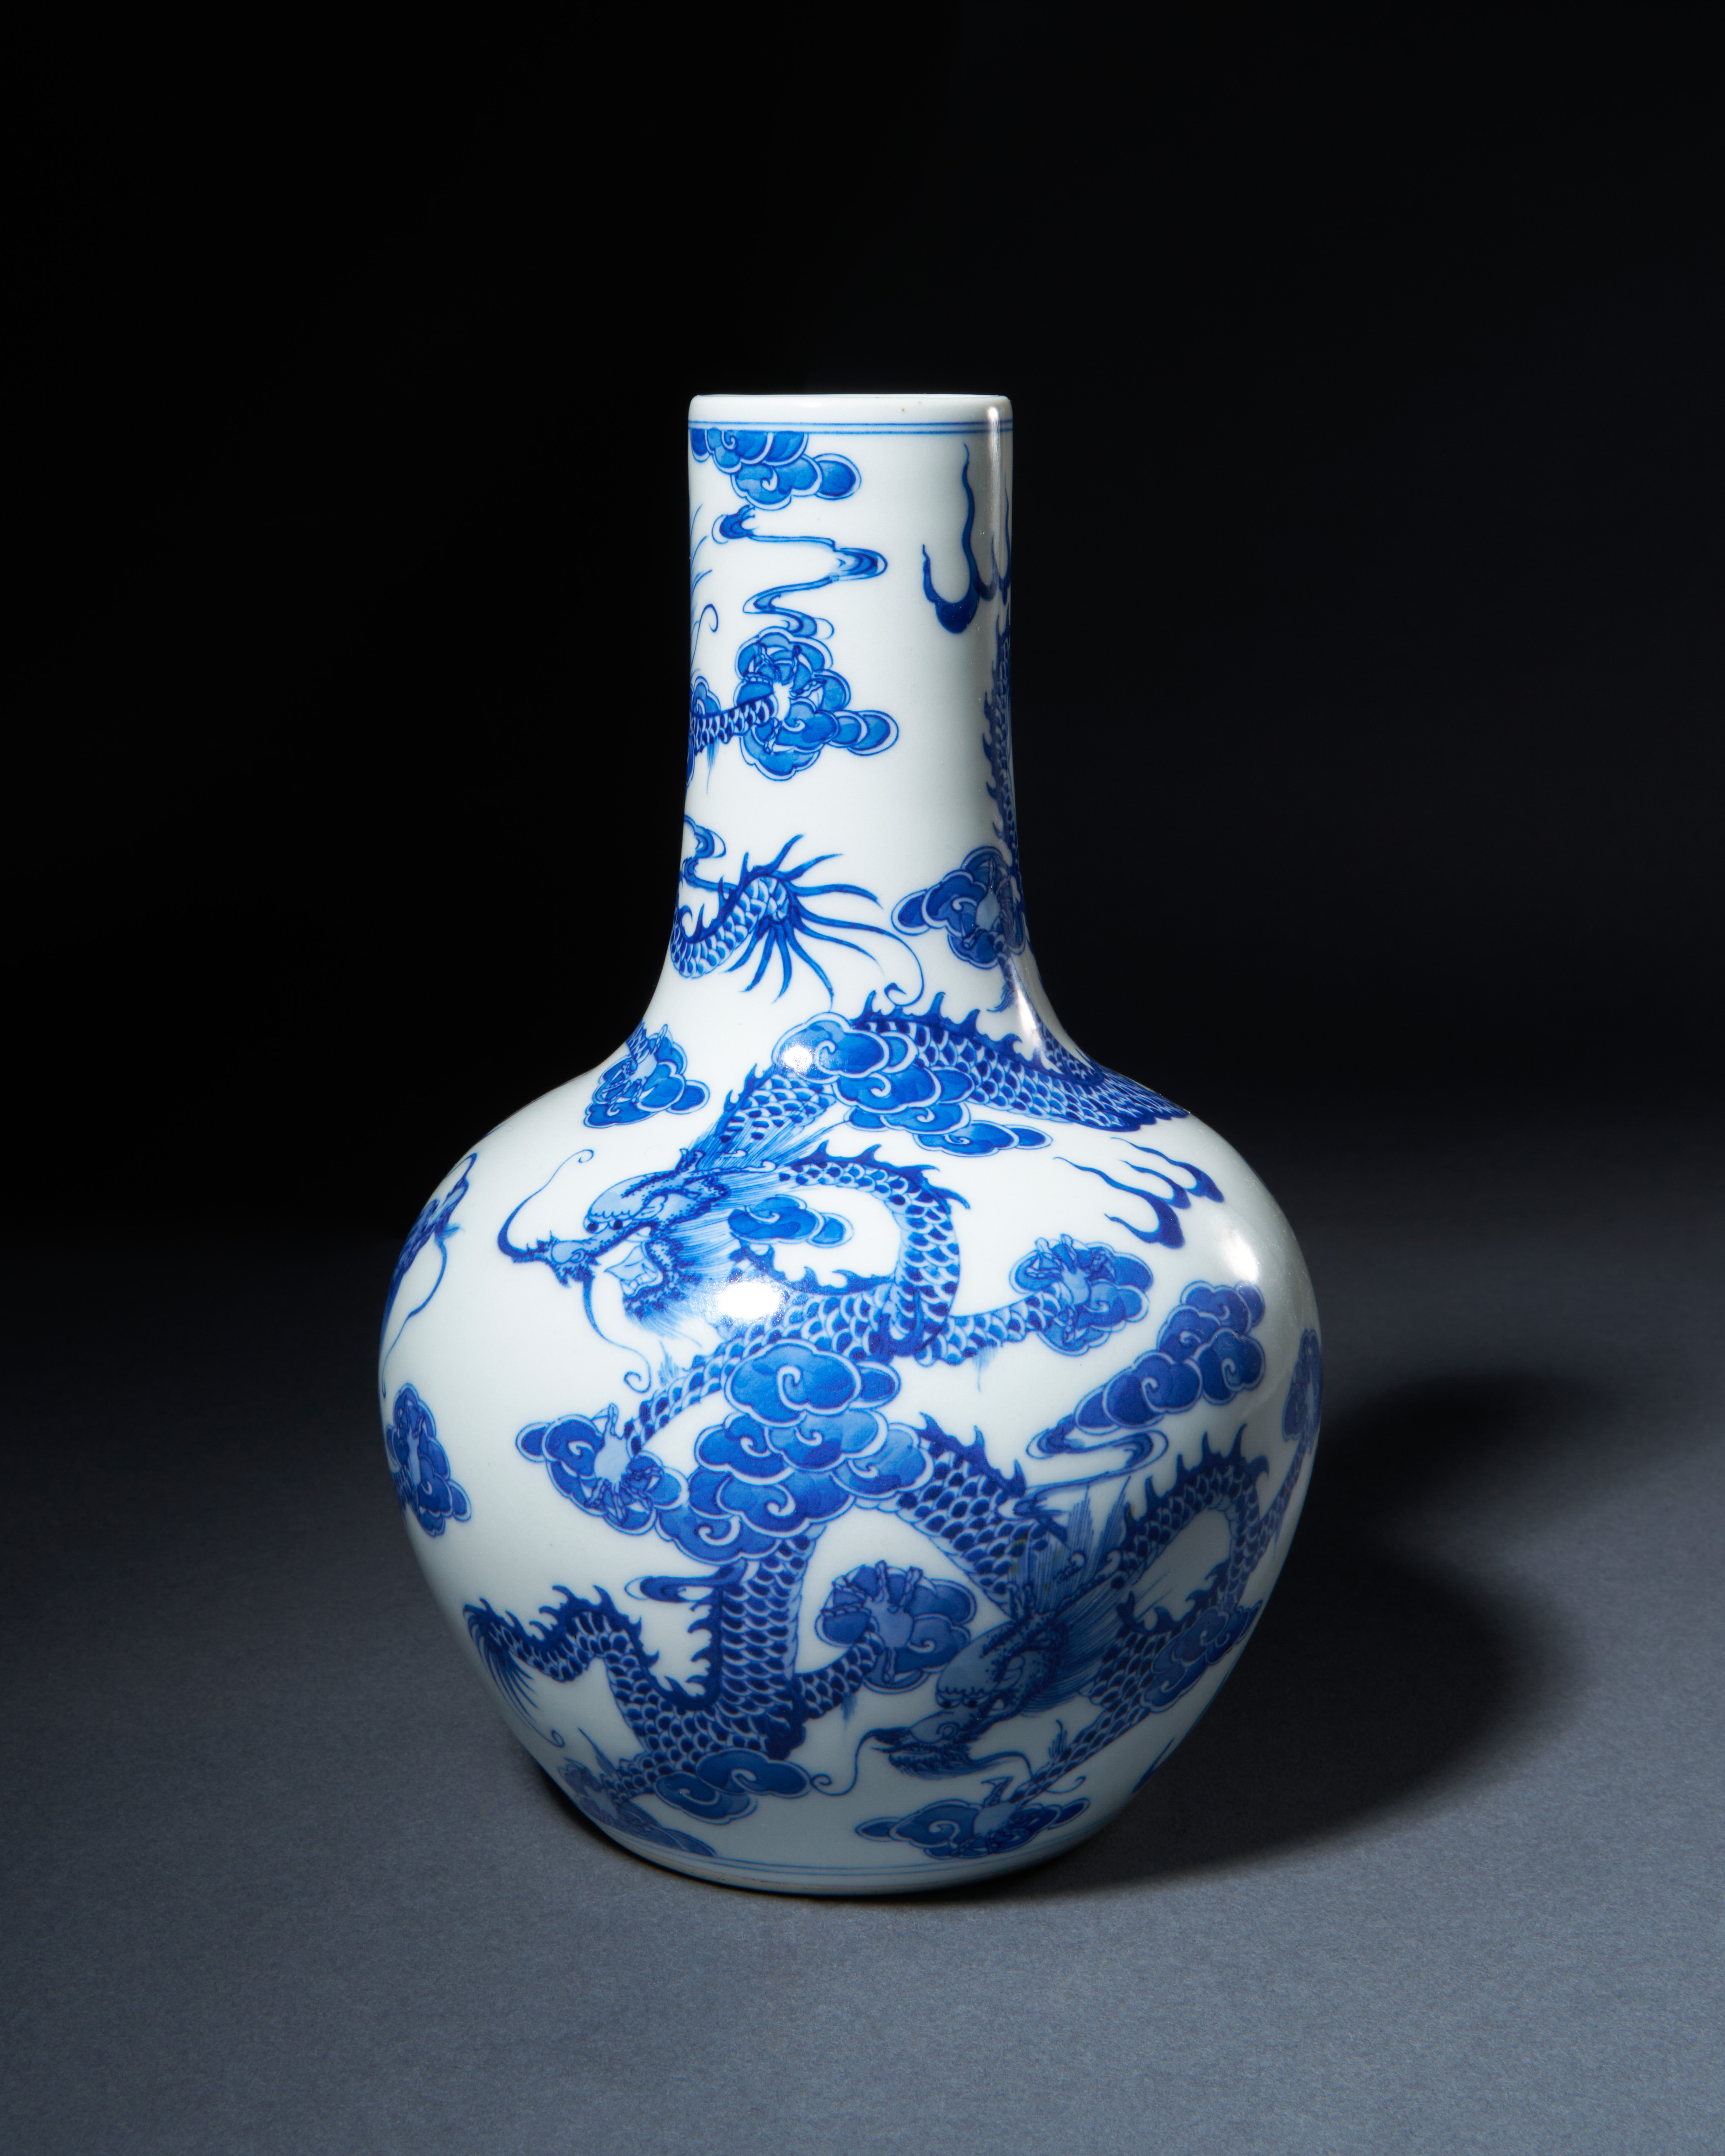 A CHINESE BLUE & WHITE BOTTLE VASE, QING DYNASTY (1644-1911)